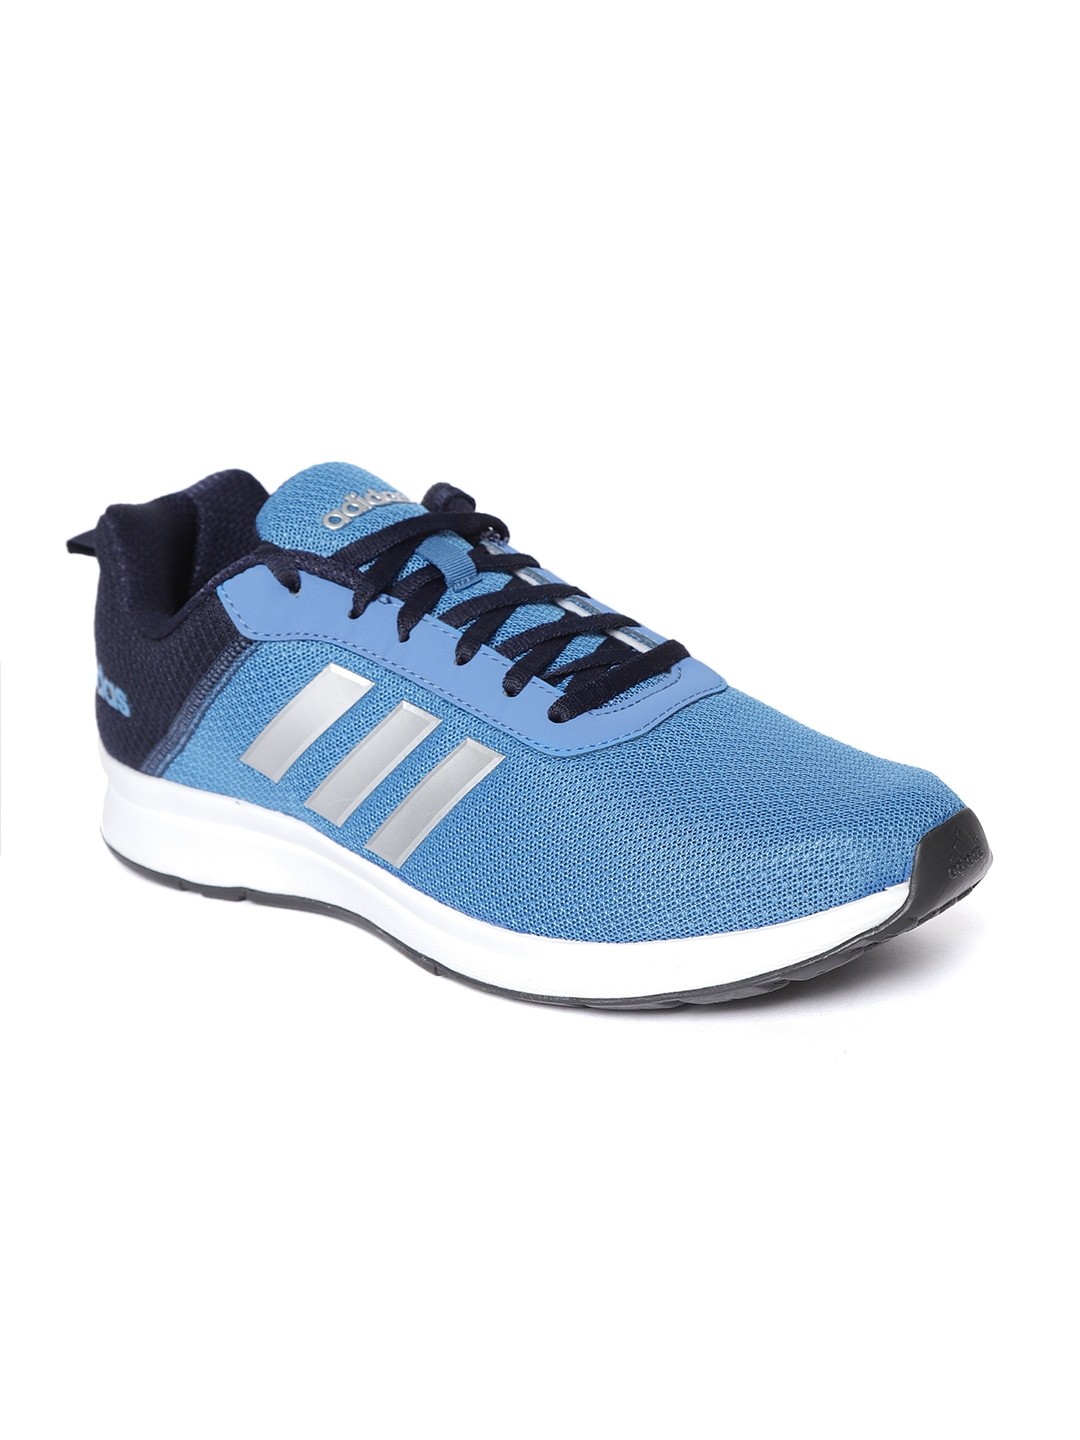 adidas running shoes men blue